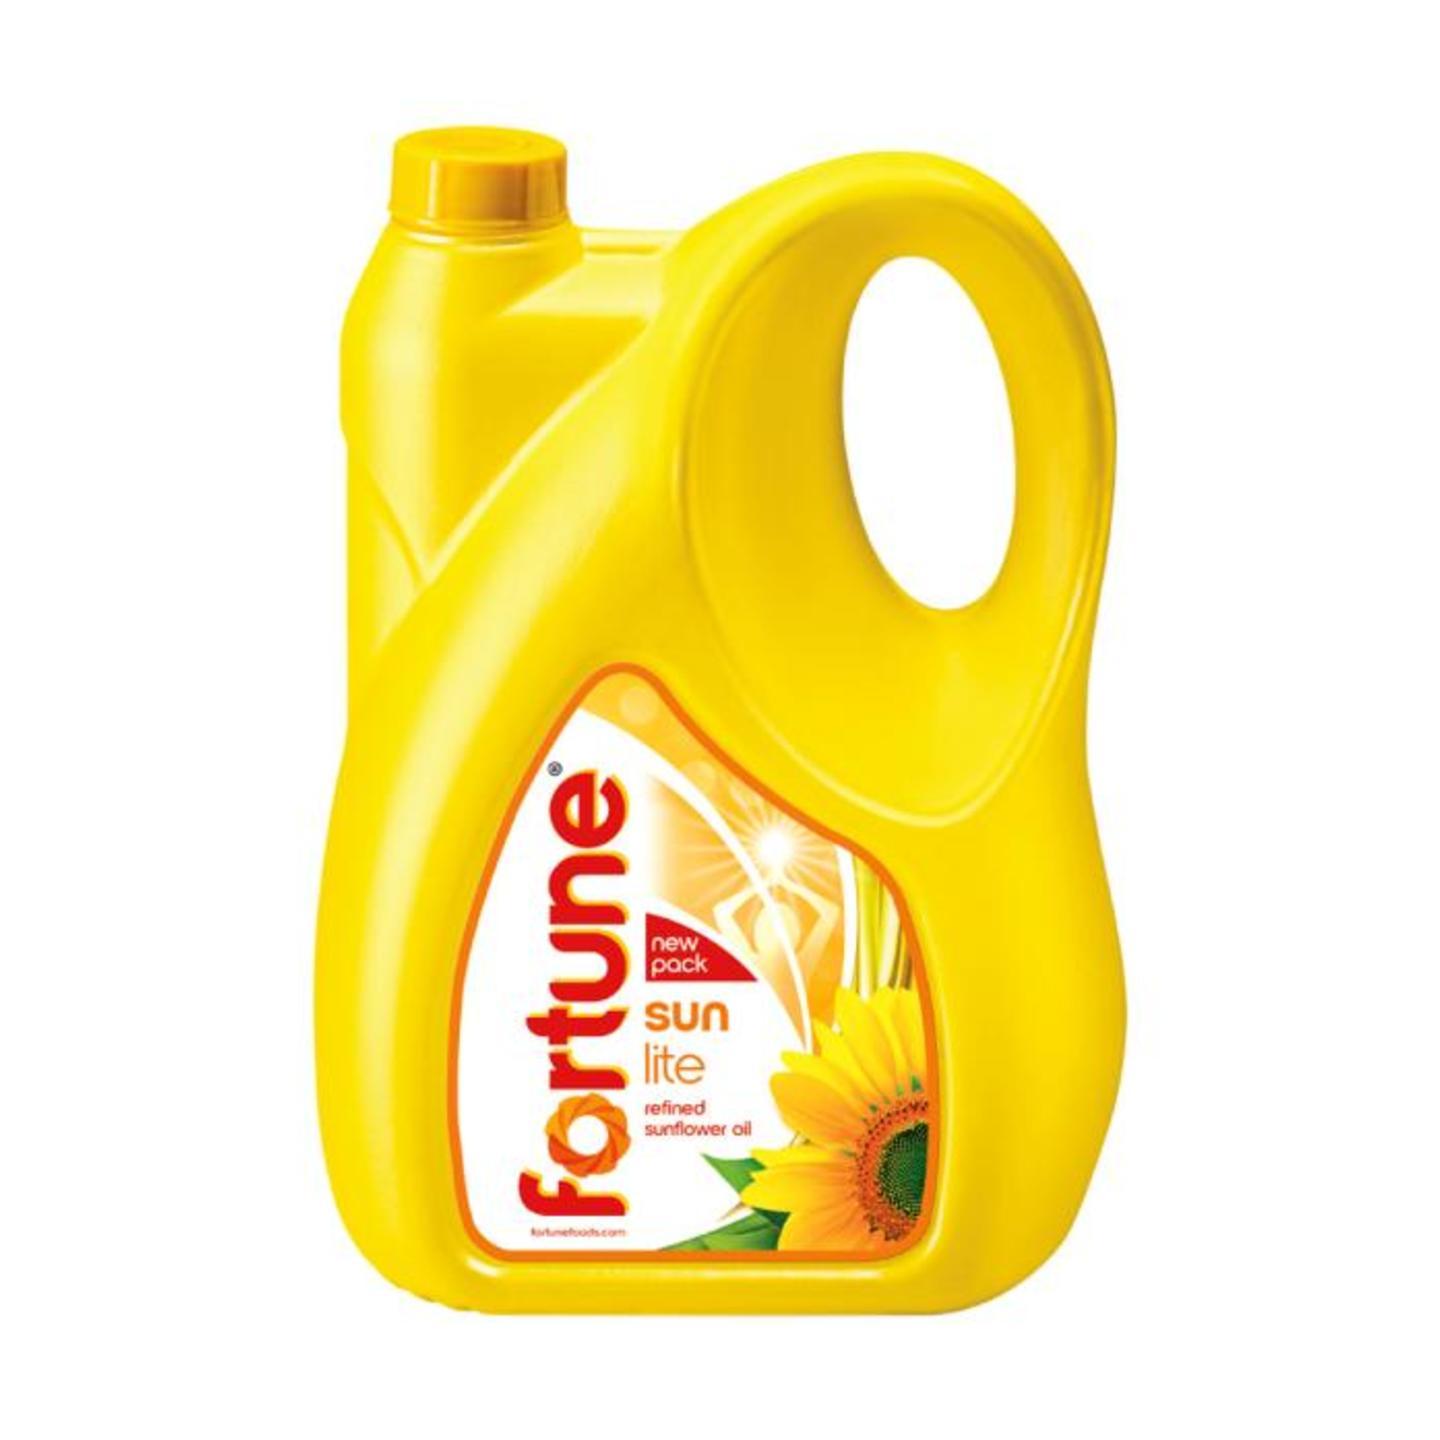 Fortune Sunlite Refined Sunflower Oil 5 L